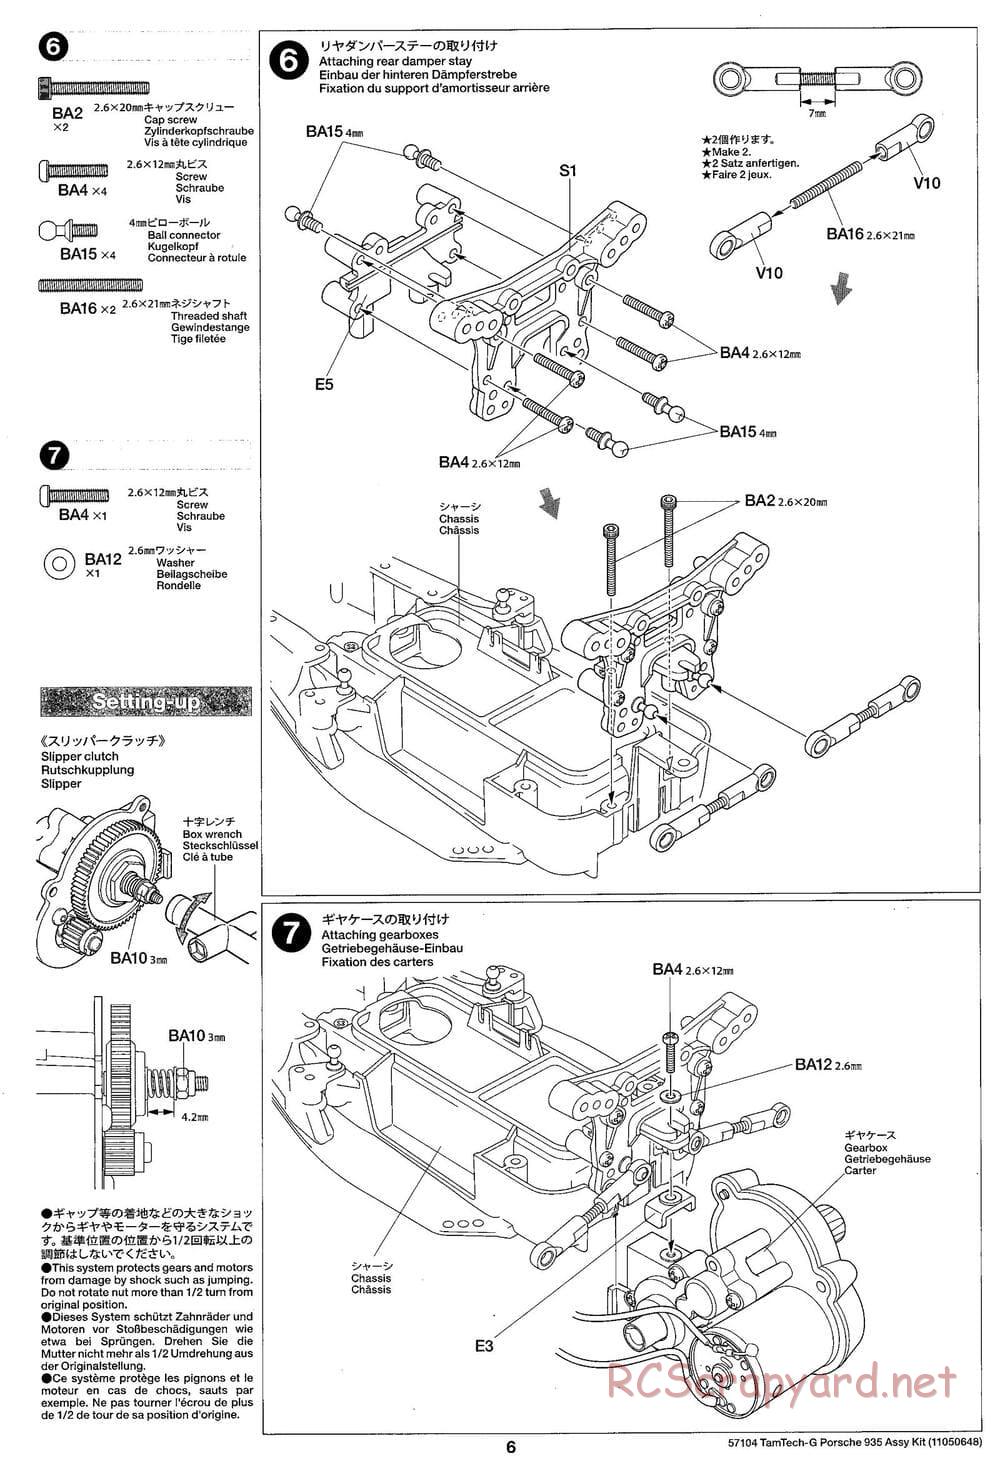 Tamiya - Porsche 935 Martini - GT-01 Chassis - Manual - Page 6